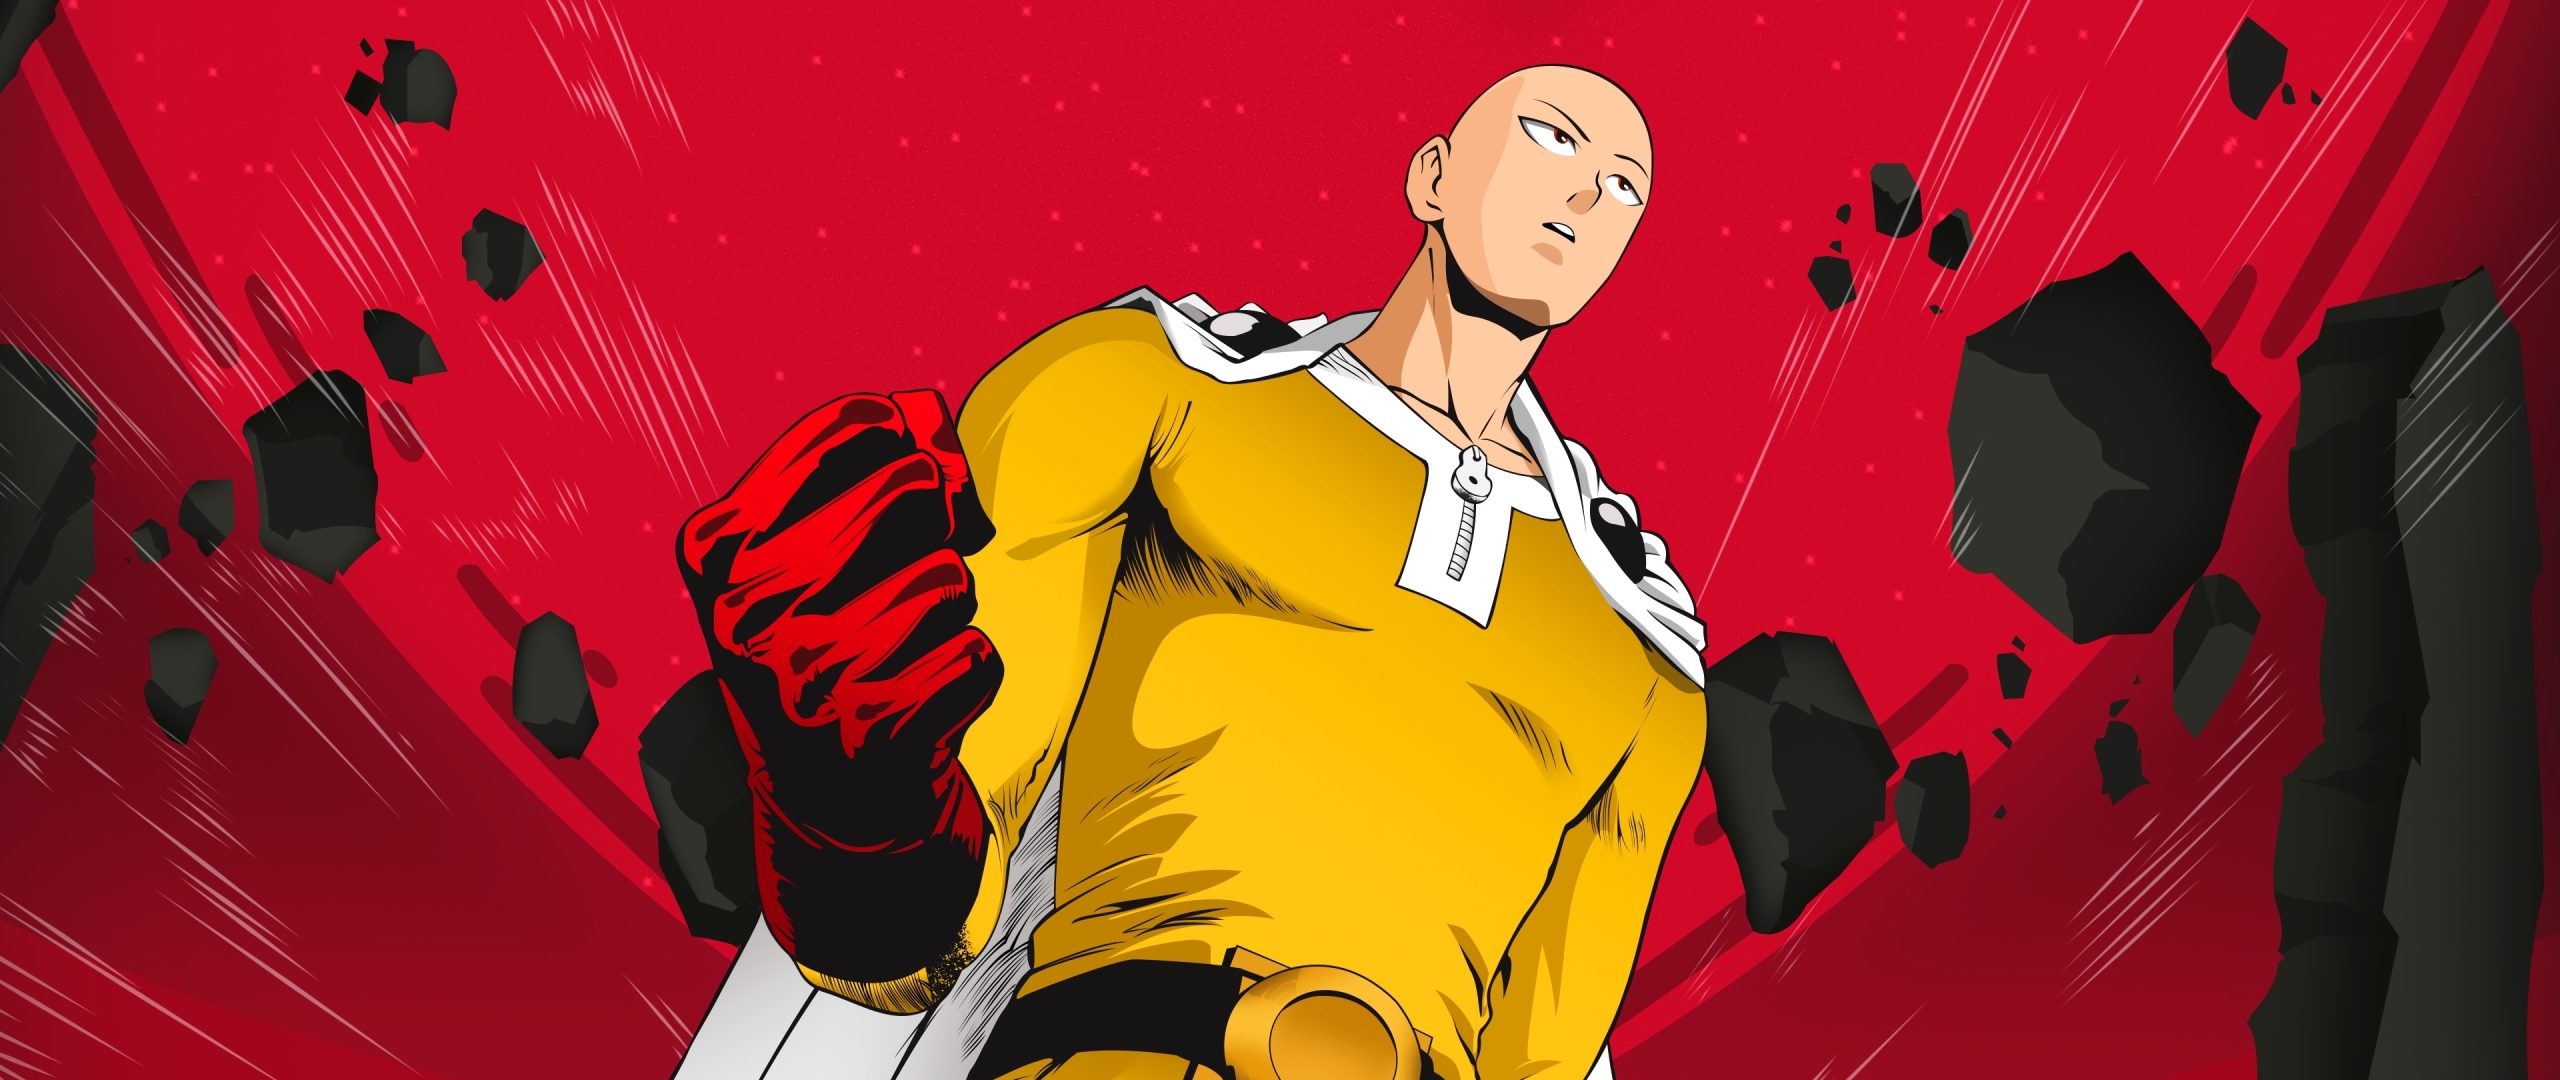 One-Punch Man #Saitama #manga #1080P #wallpaper #hdwallpaper #desktop